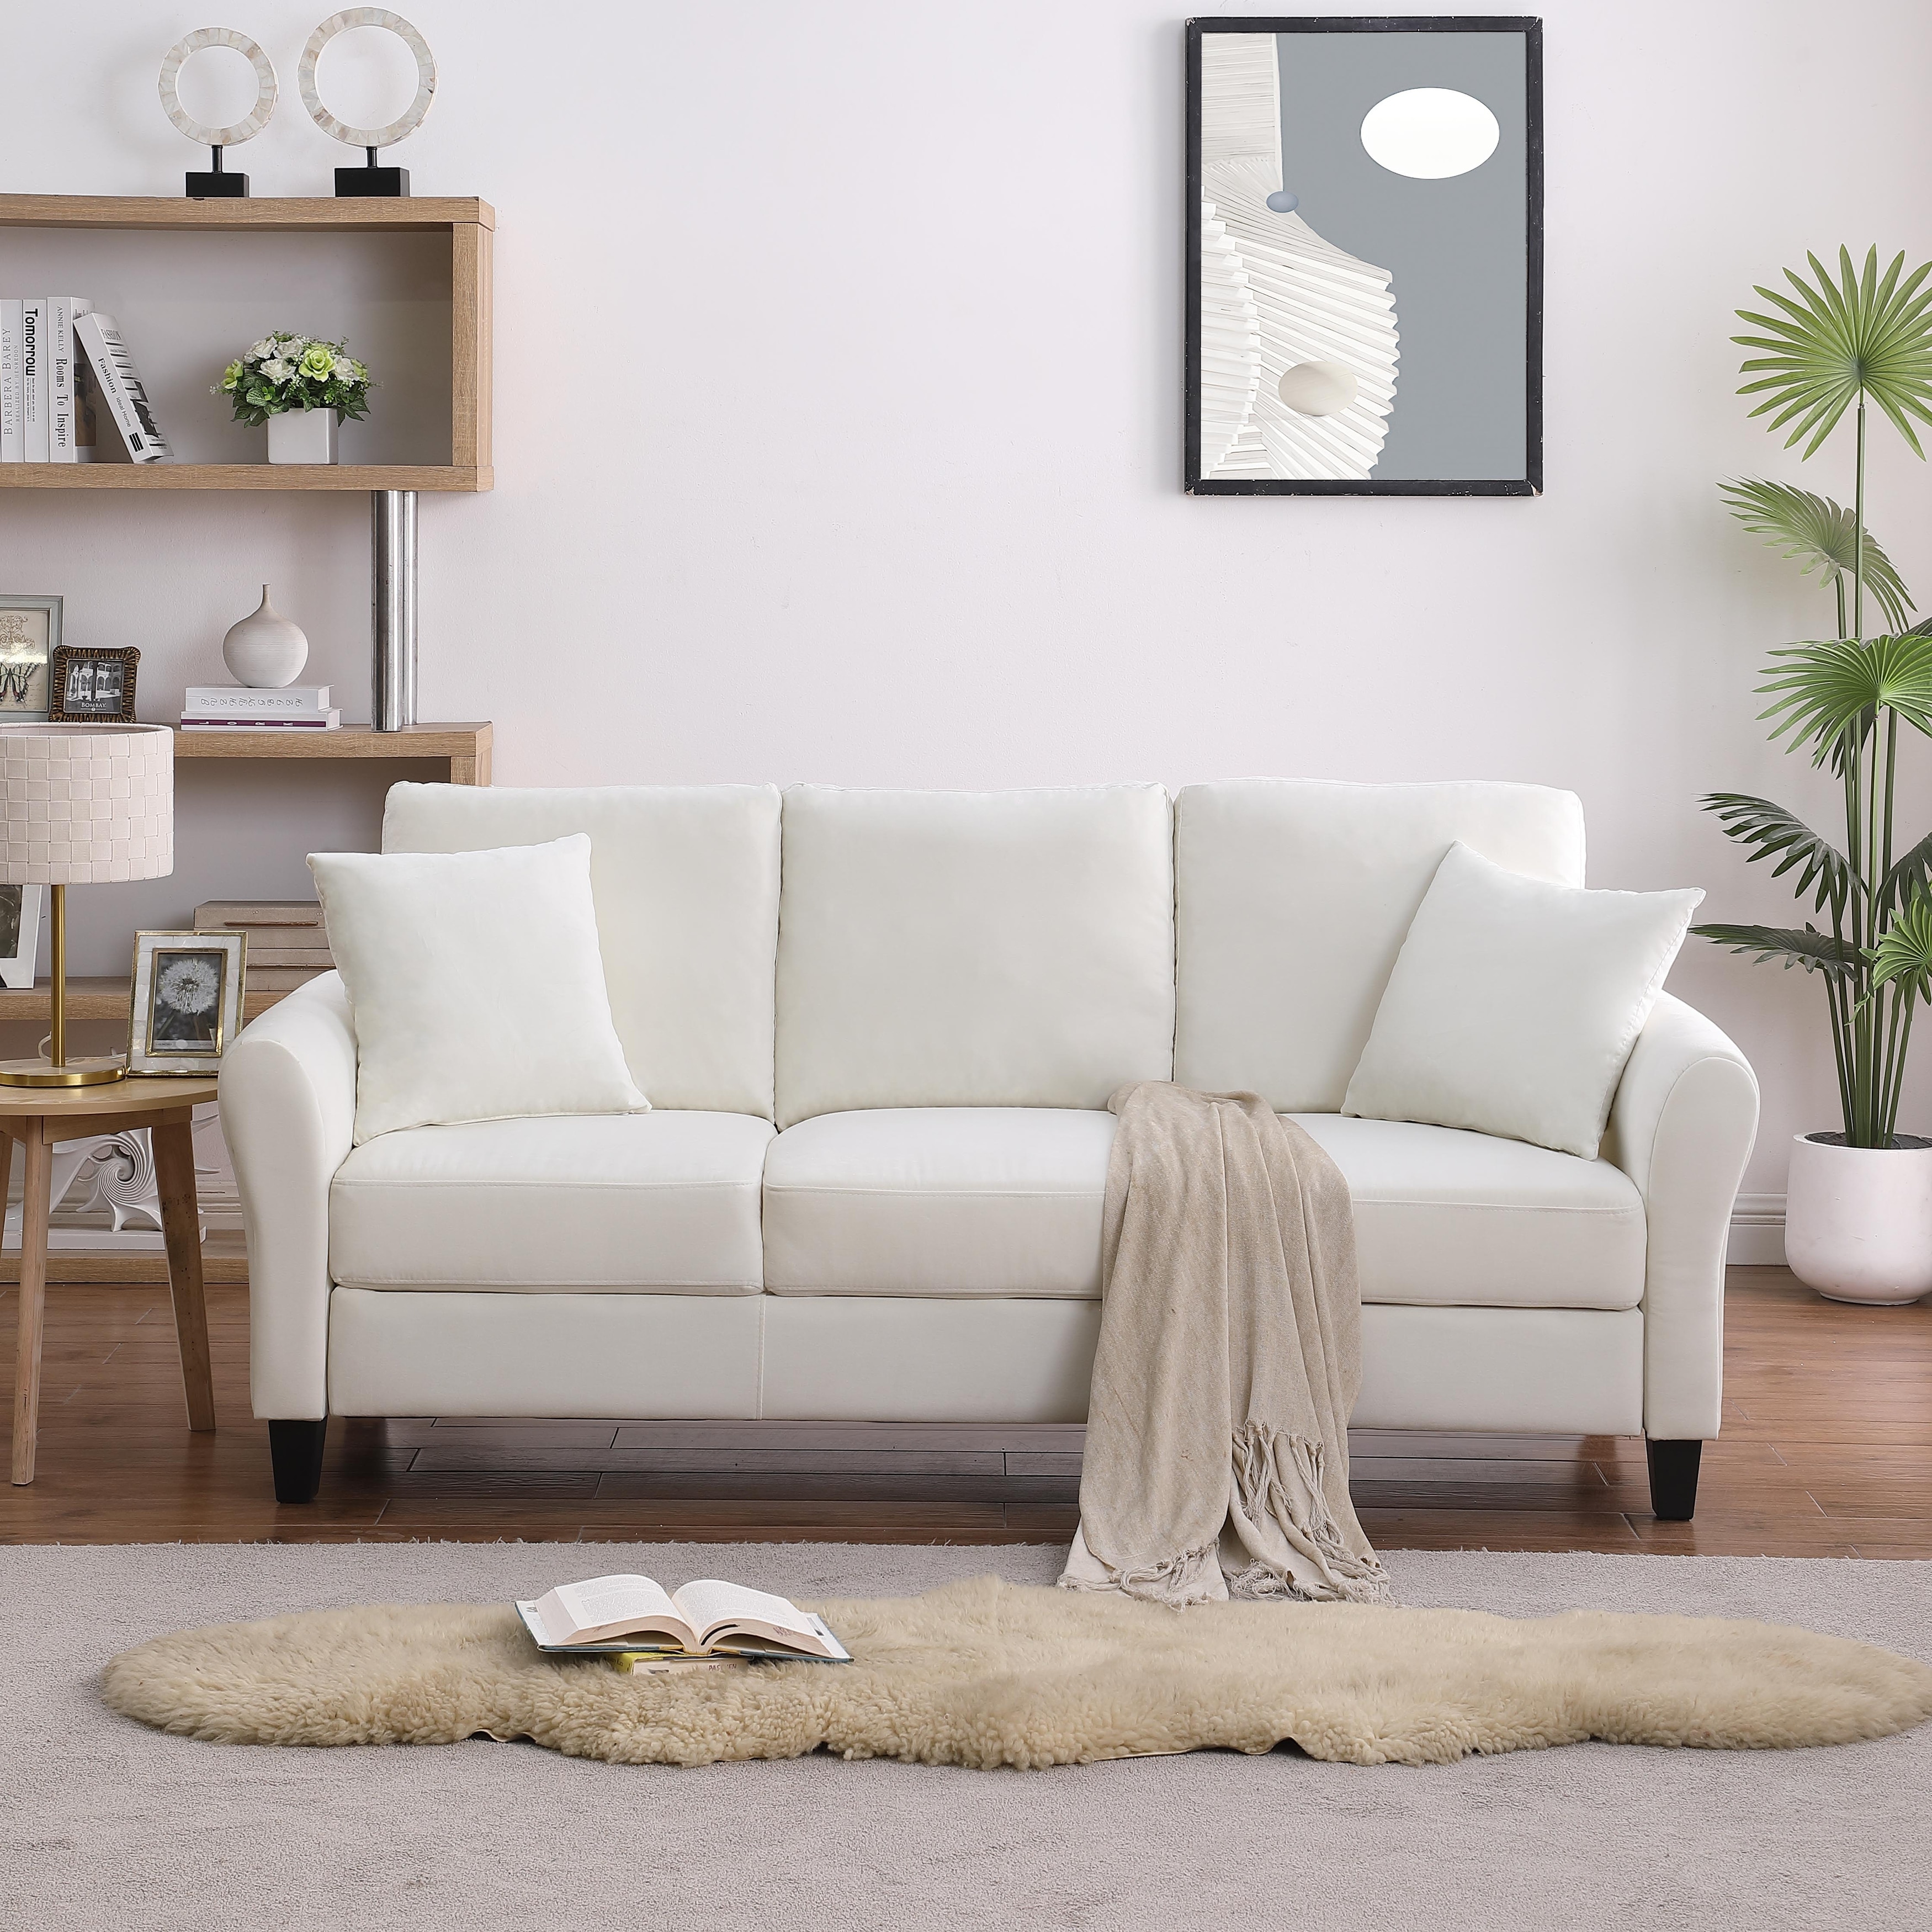 Comfortable Velvet 3-Seater Sofa with Detachable Back Cushions - White